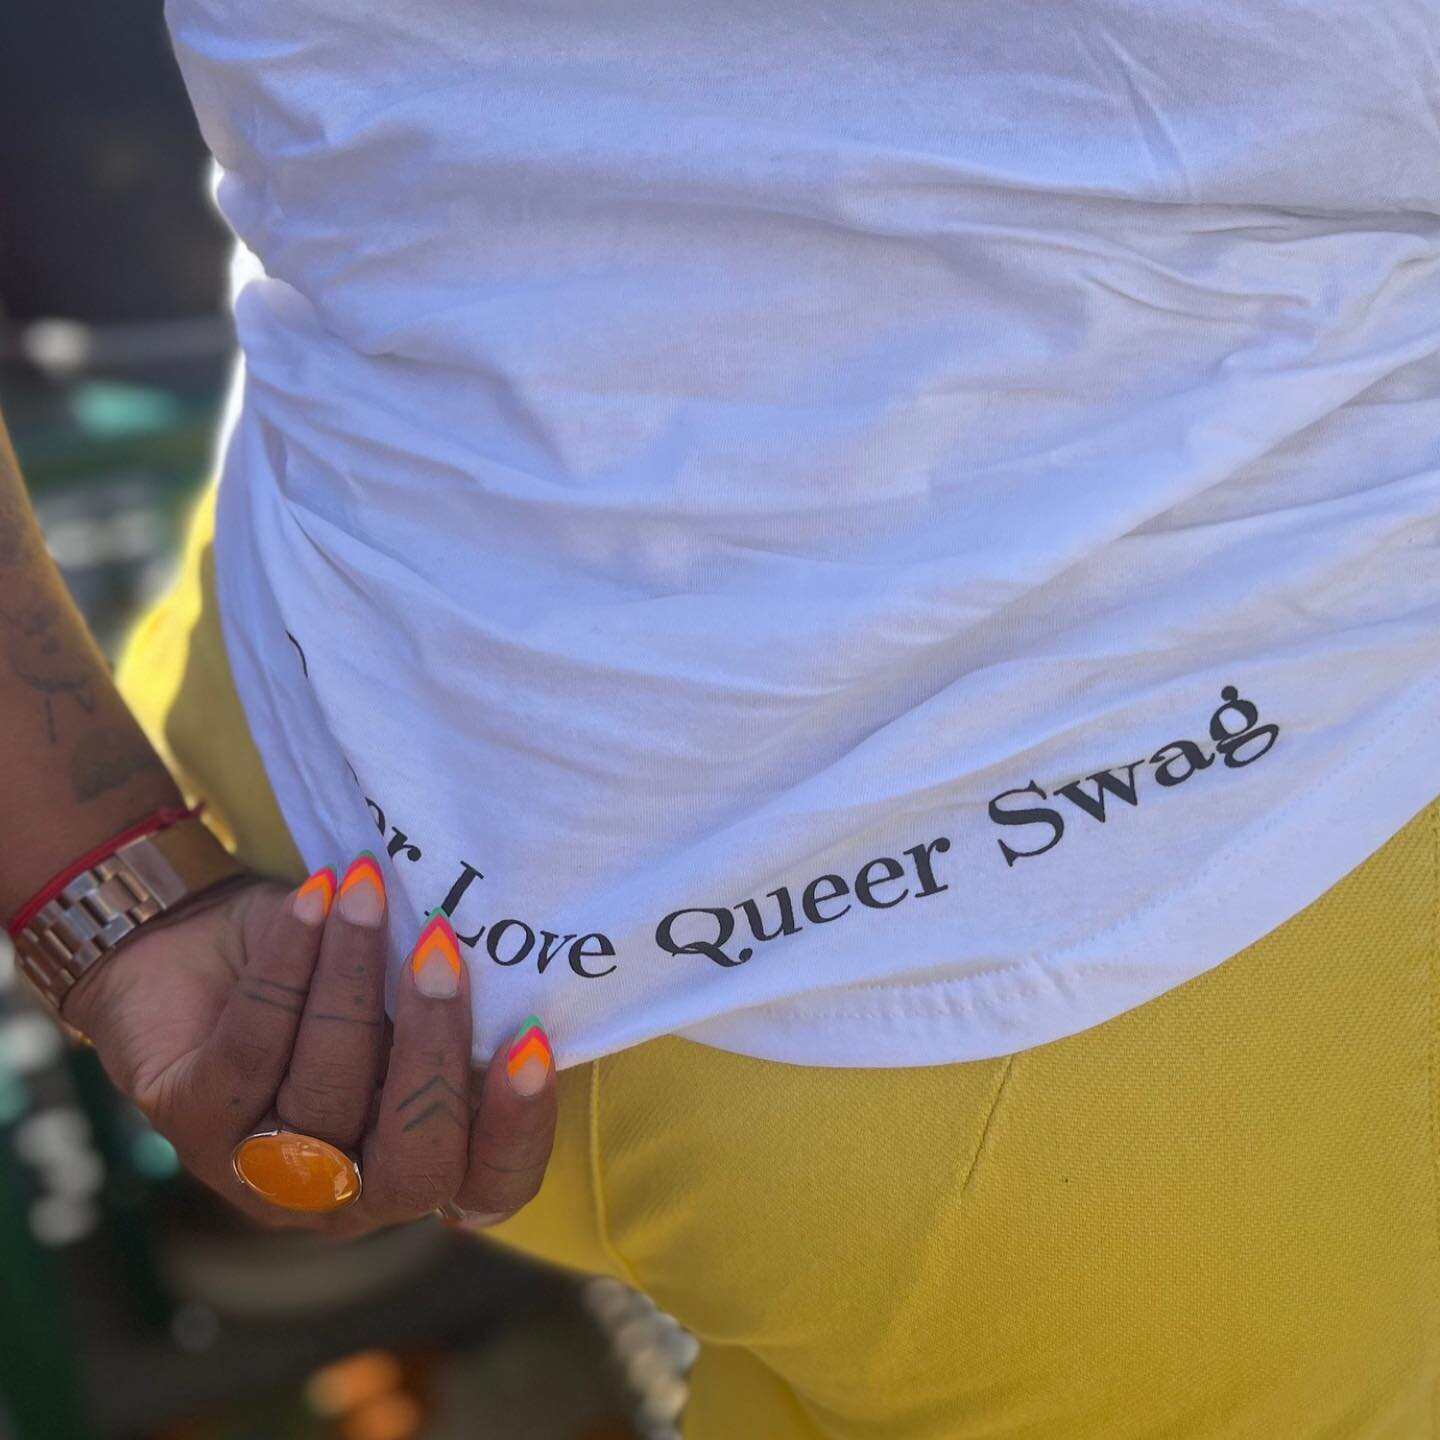 Queer love, Queer swag.

Link to shop in bio.